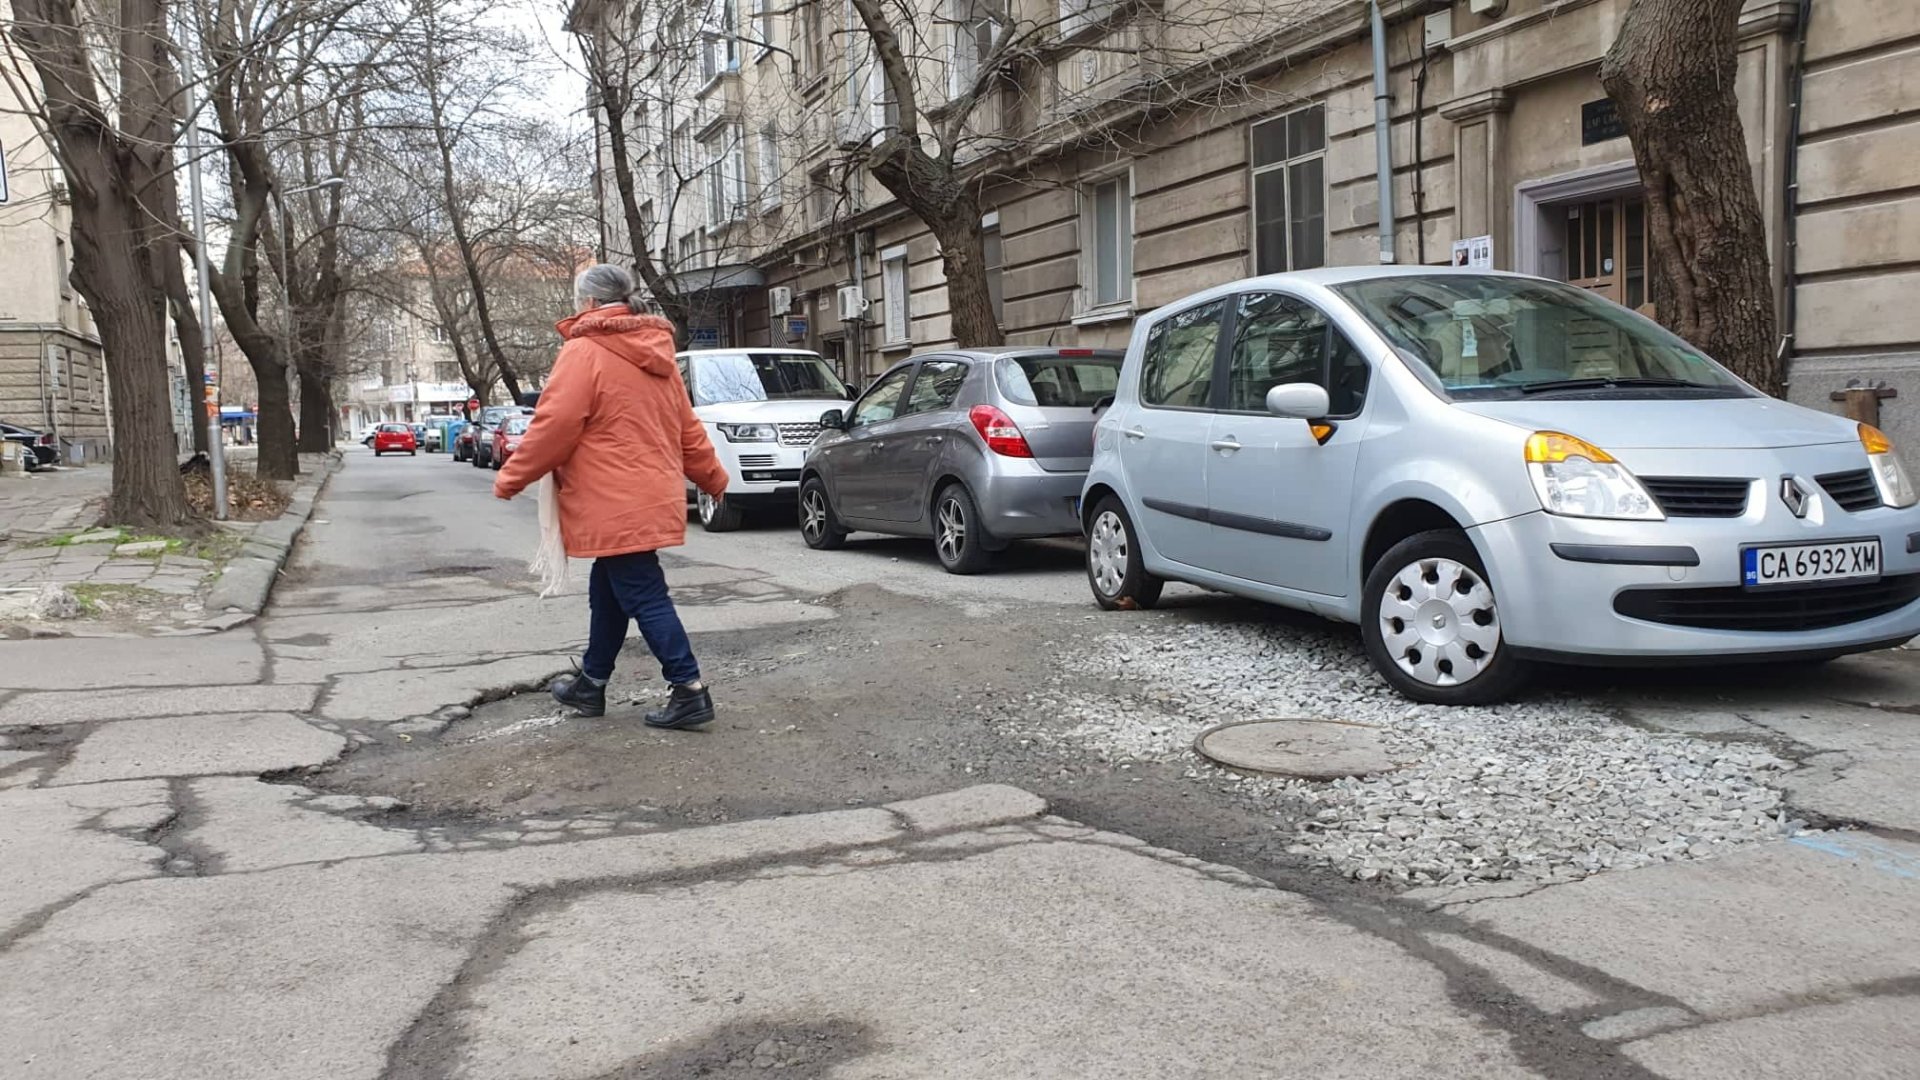 Огромна дупка троши коли в центъра на Бургас  - E-Burgas.com